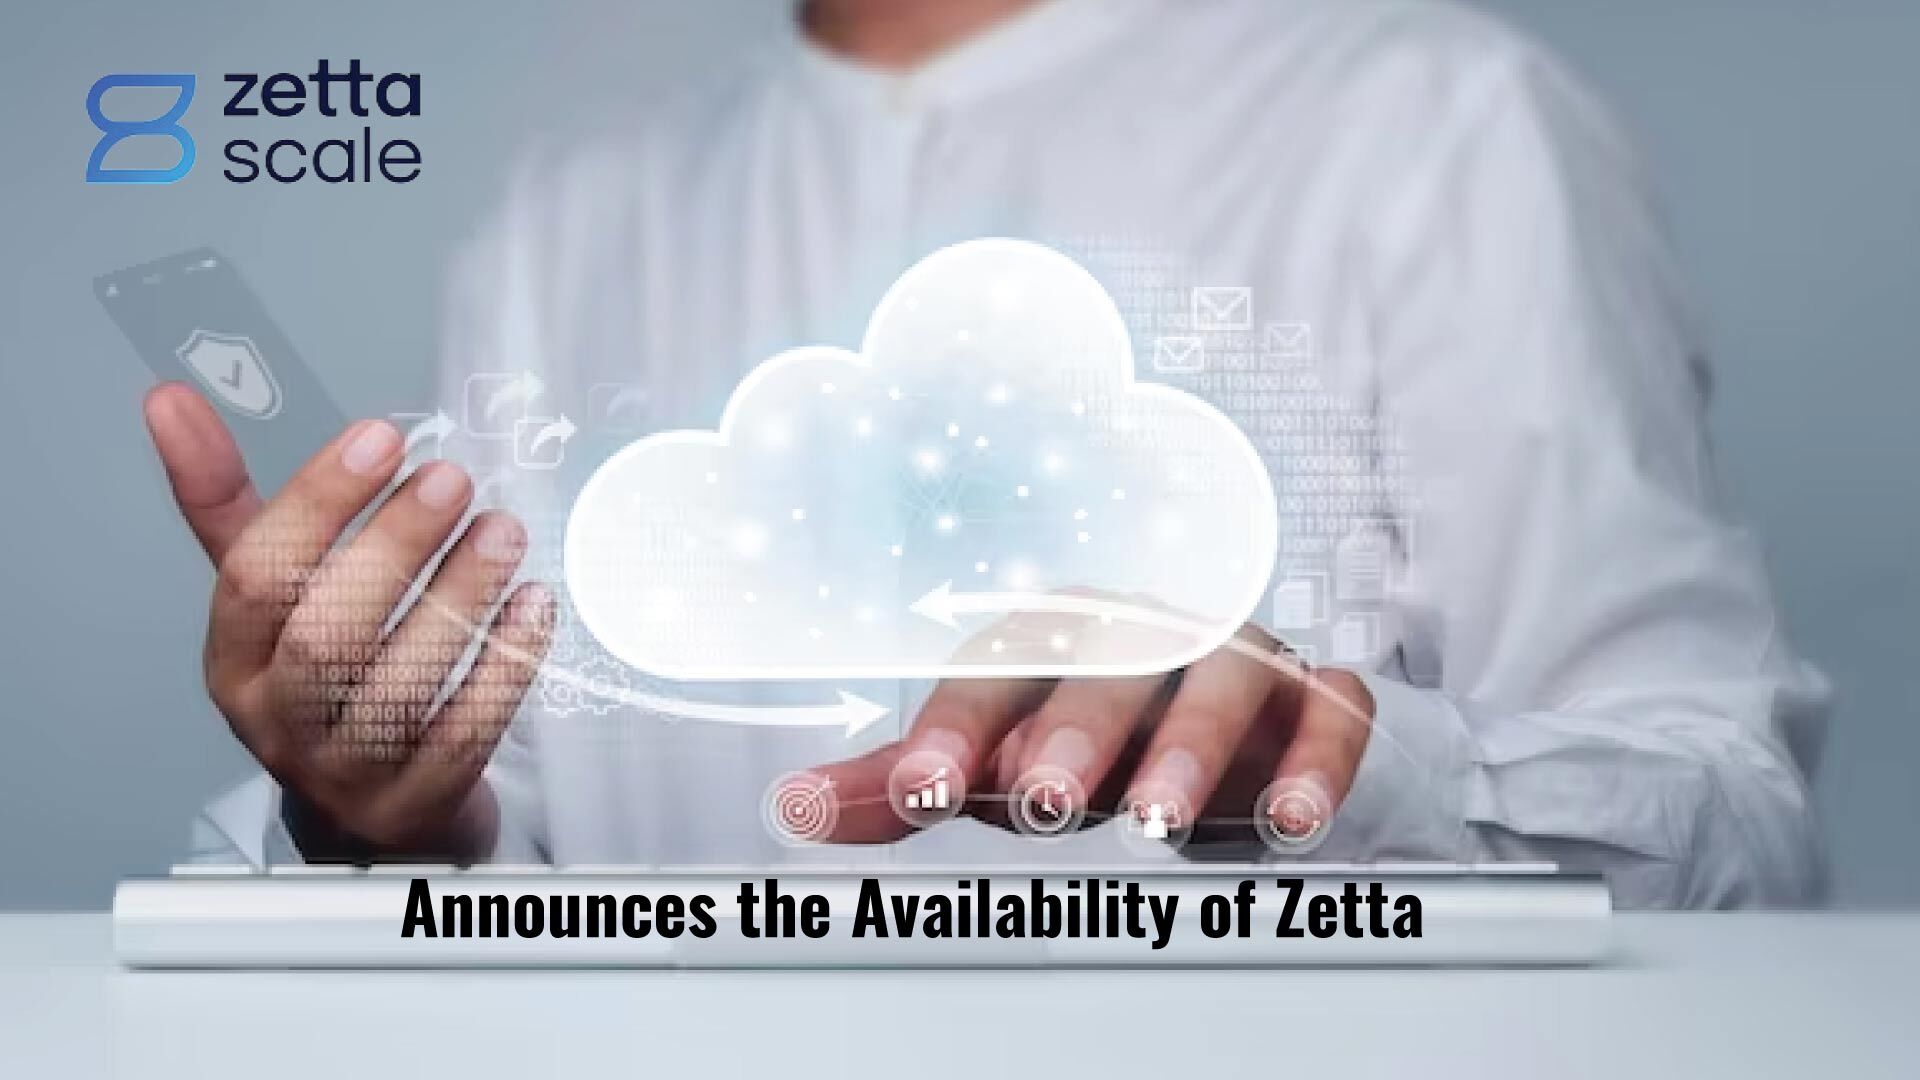 ZettaScale announces the availability of Zetta, its cloud-to-microcontroller platform